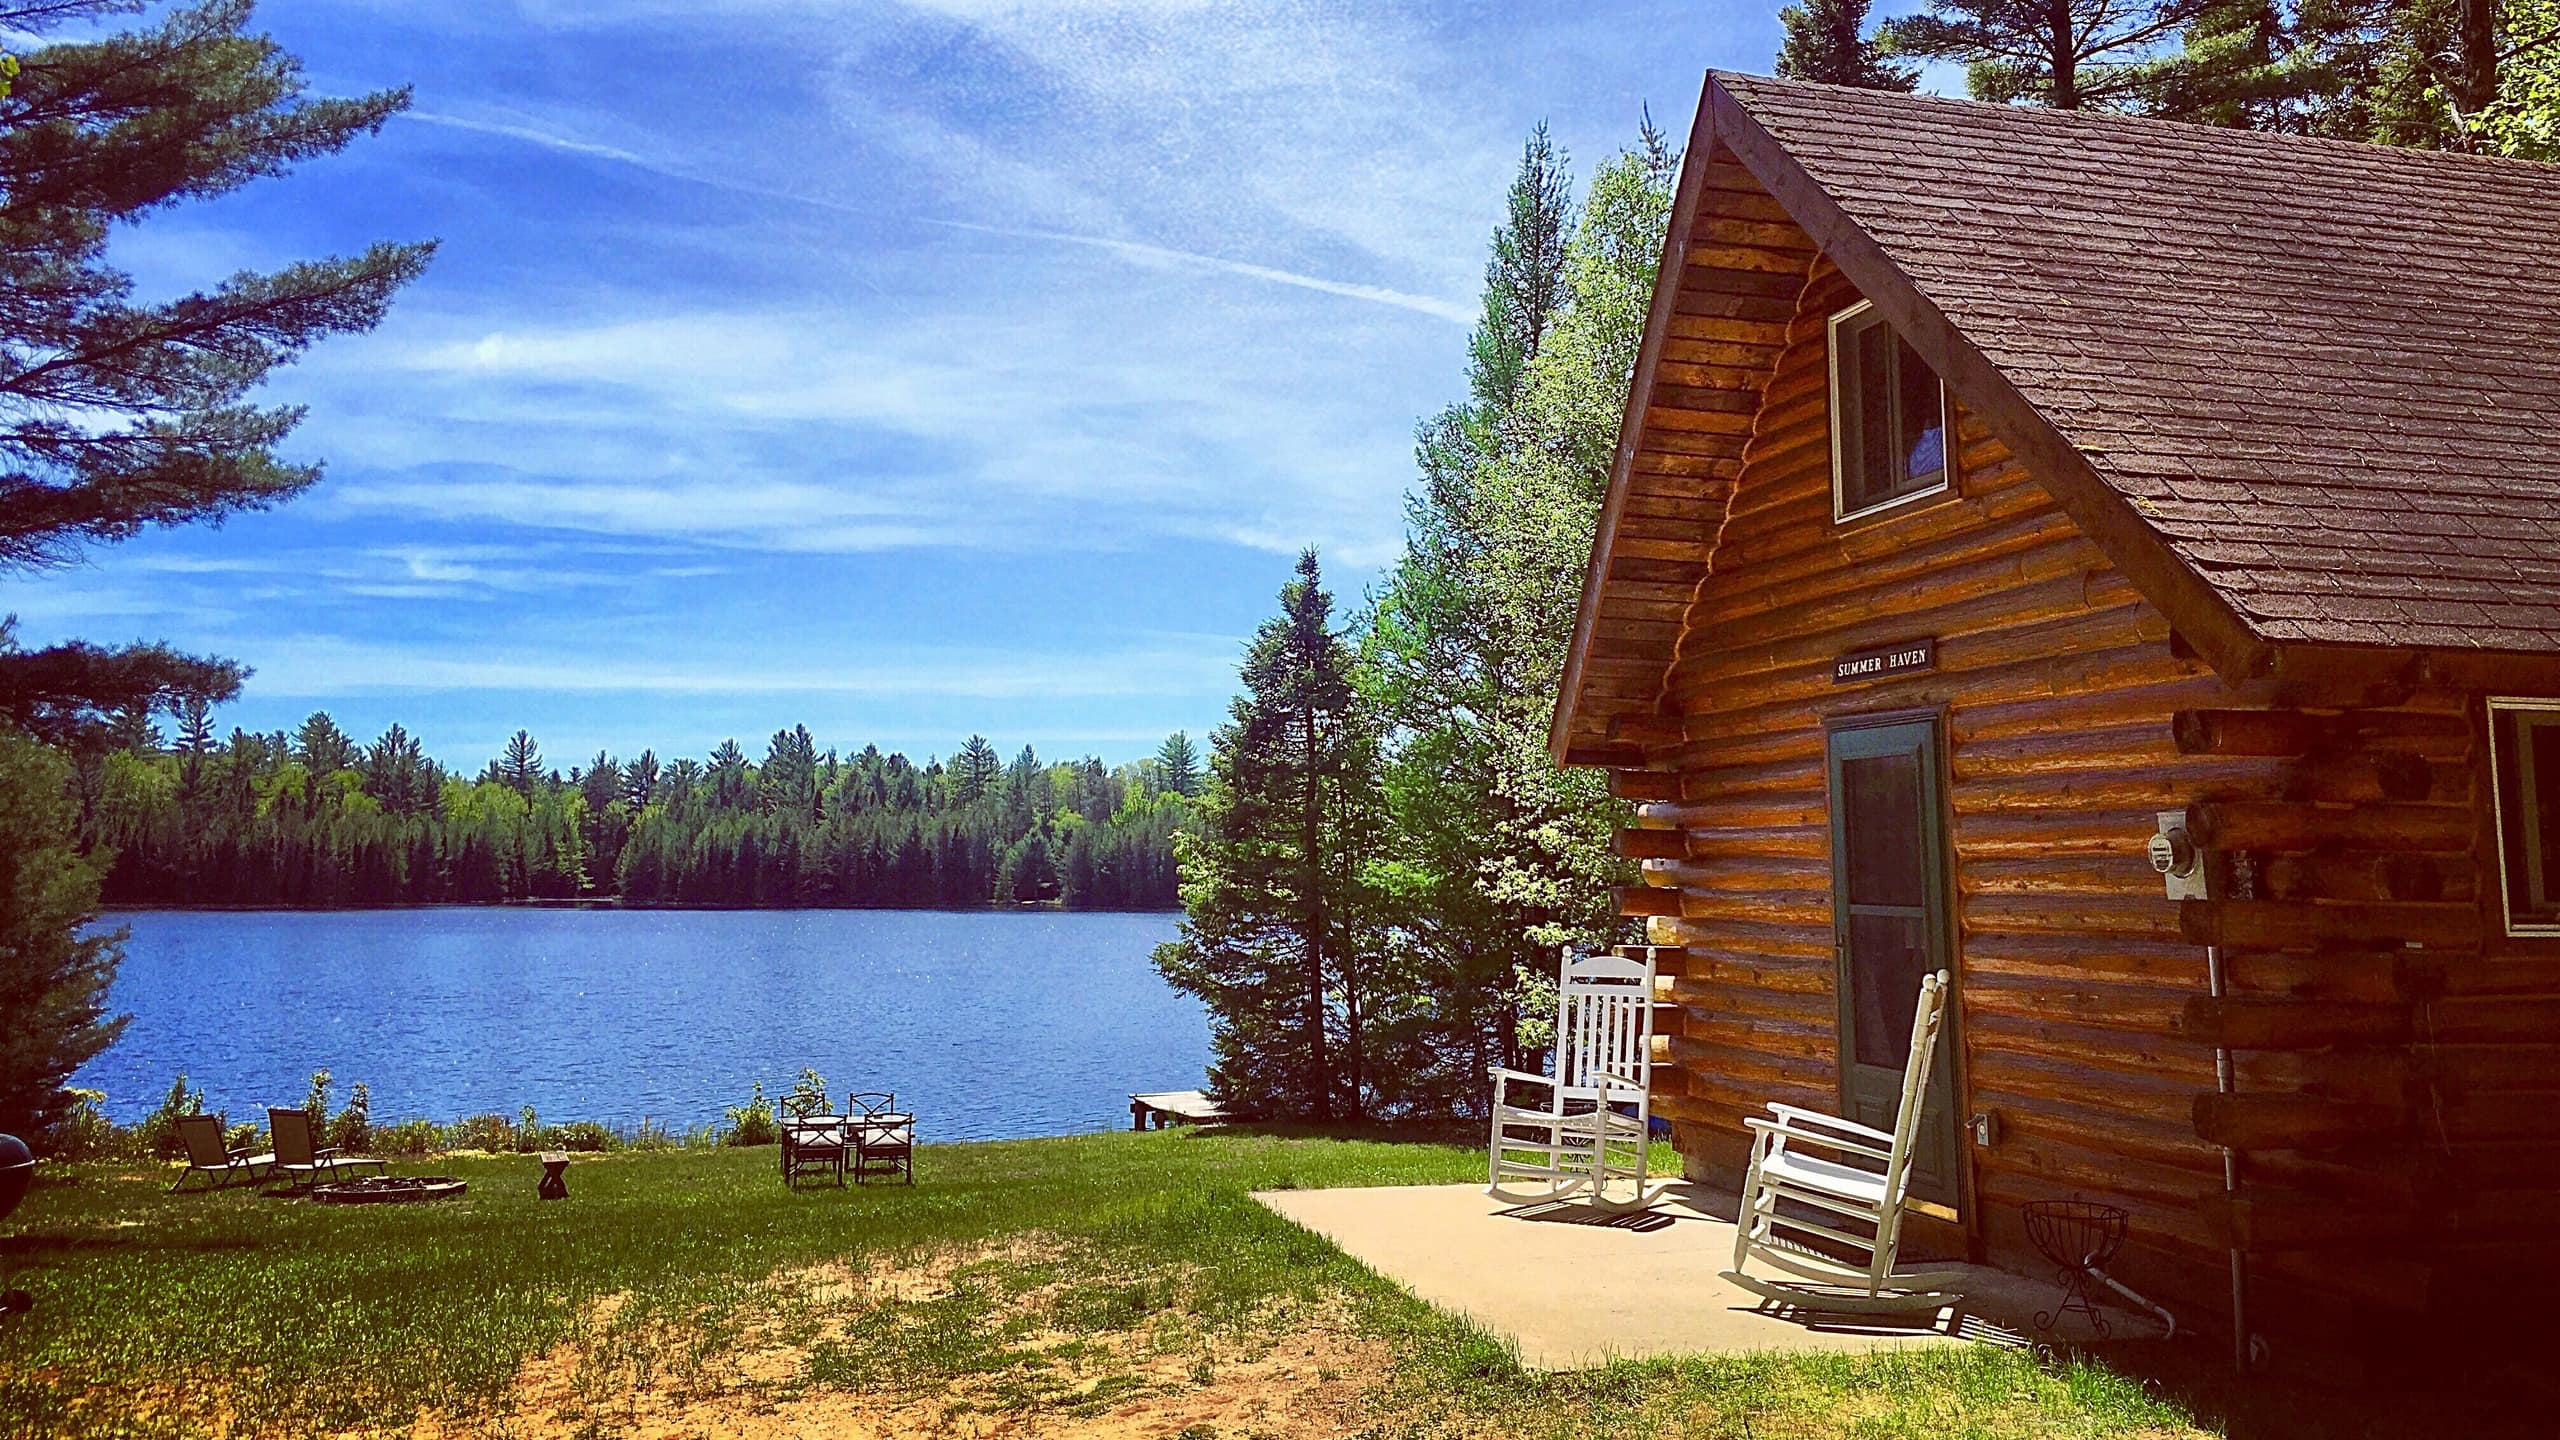 Stunning spots to enjoy cabin rentals in Michigan